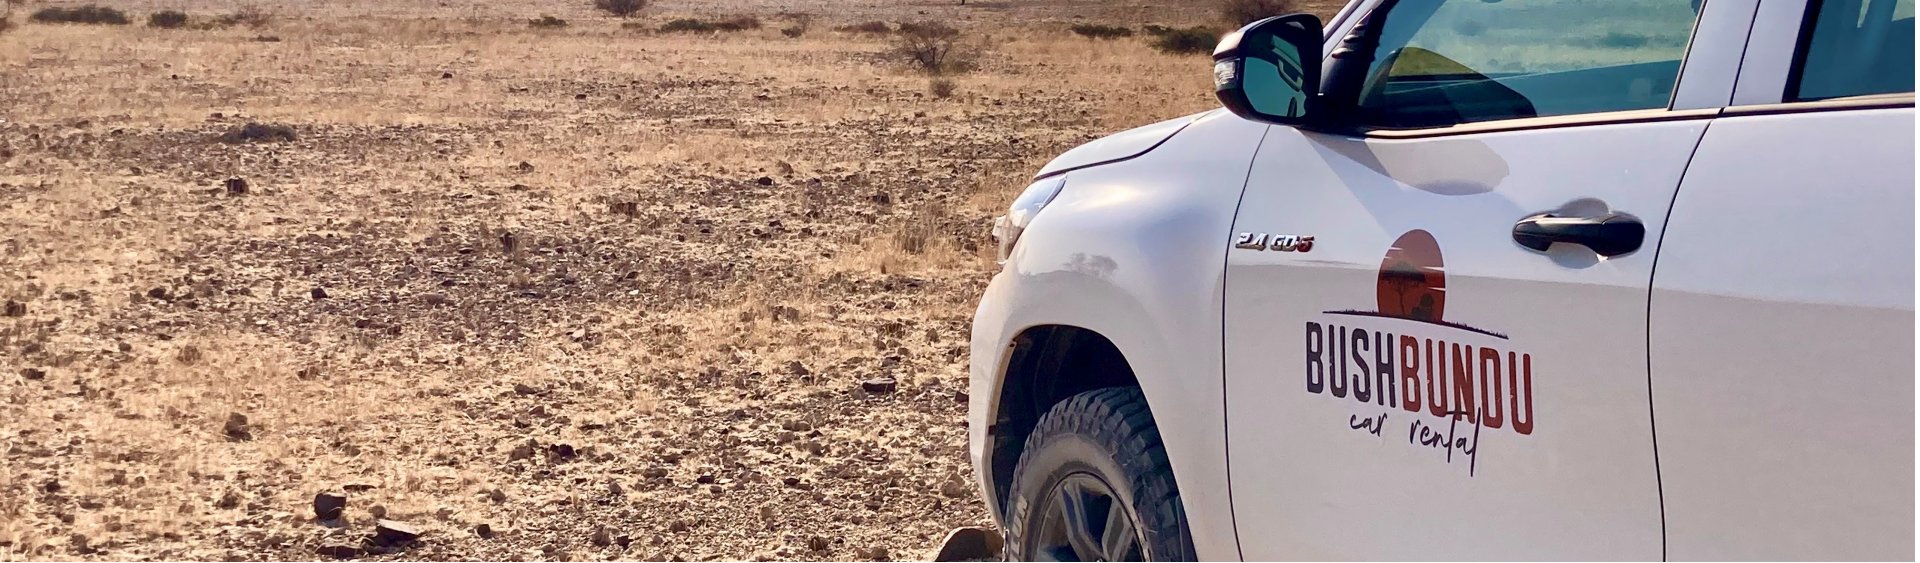 bushbundu-car-rental-windhoek-namibia-image-of-toyota-hilux-in-the-desert-with-bushbundu-logo-fleet-page-cover-image